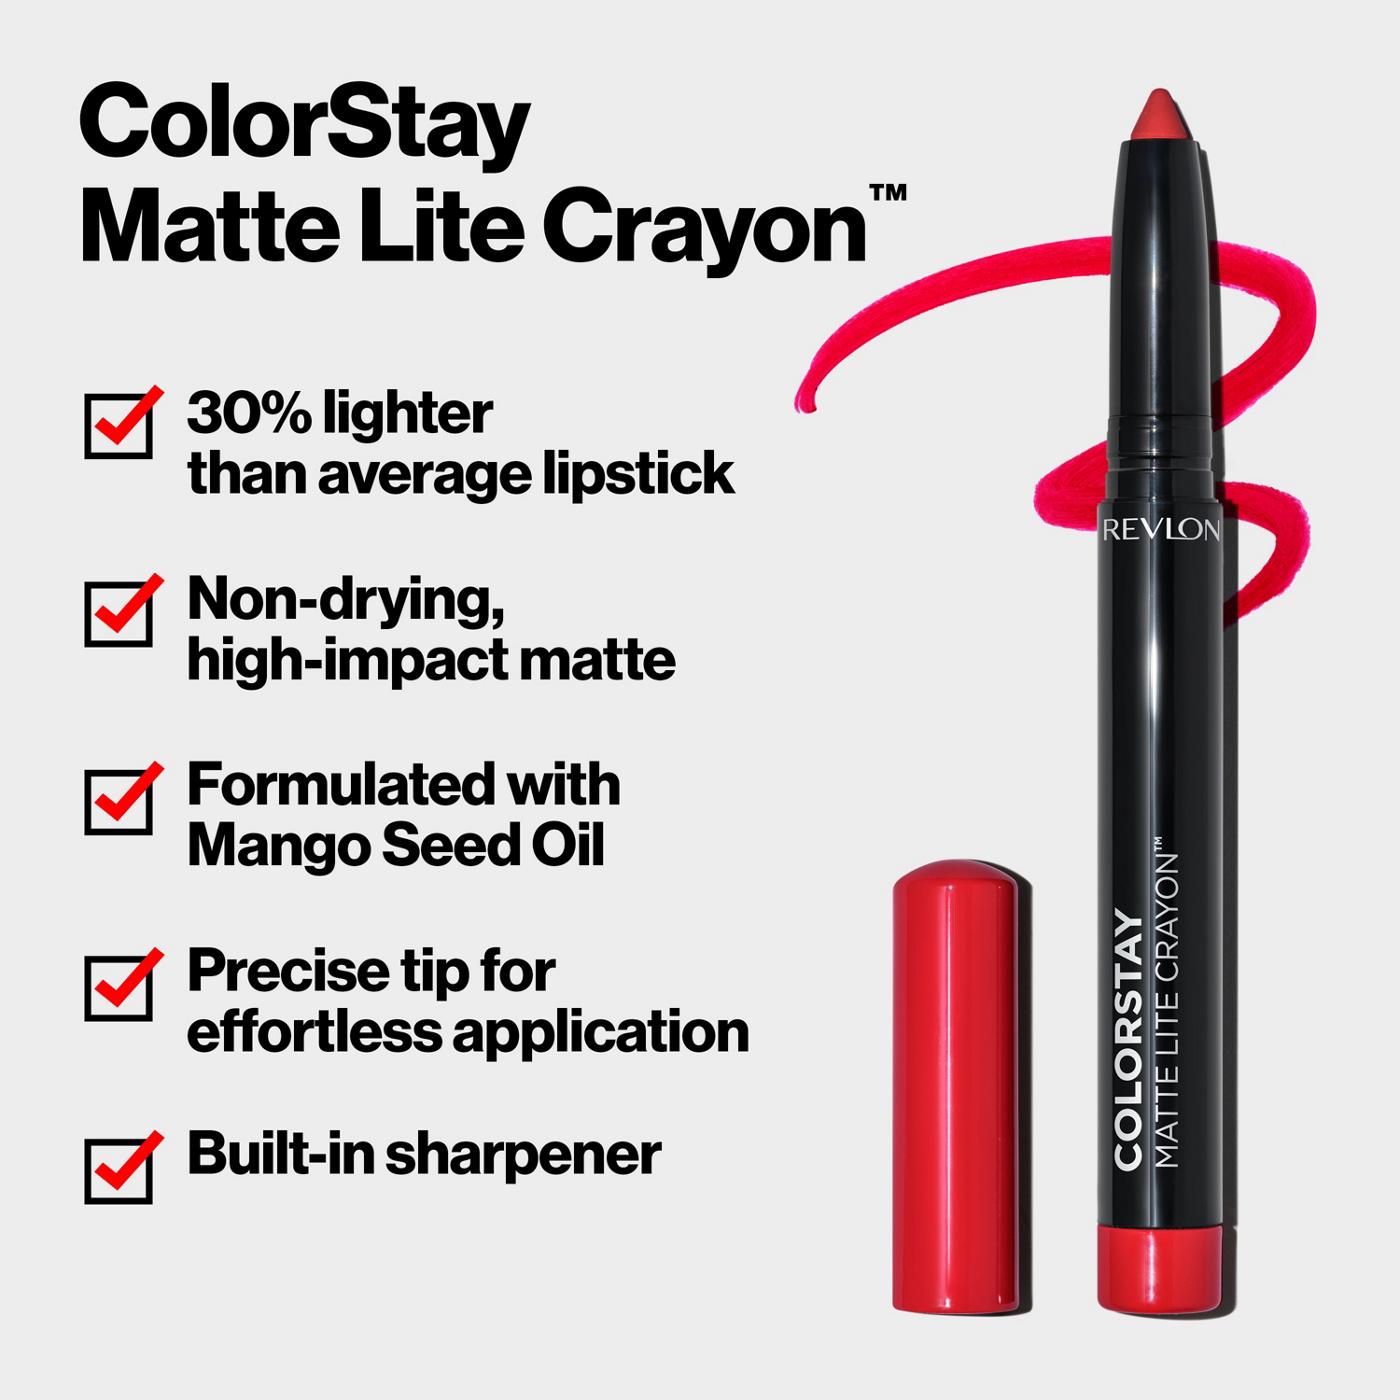 Revlon ColorStay Matte Lite Crayon Lipstick - Sky High; image 5 of 7